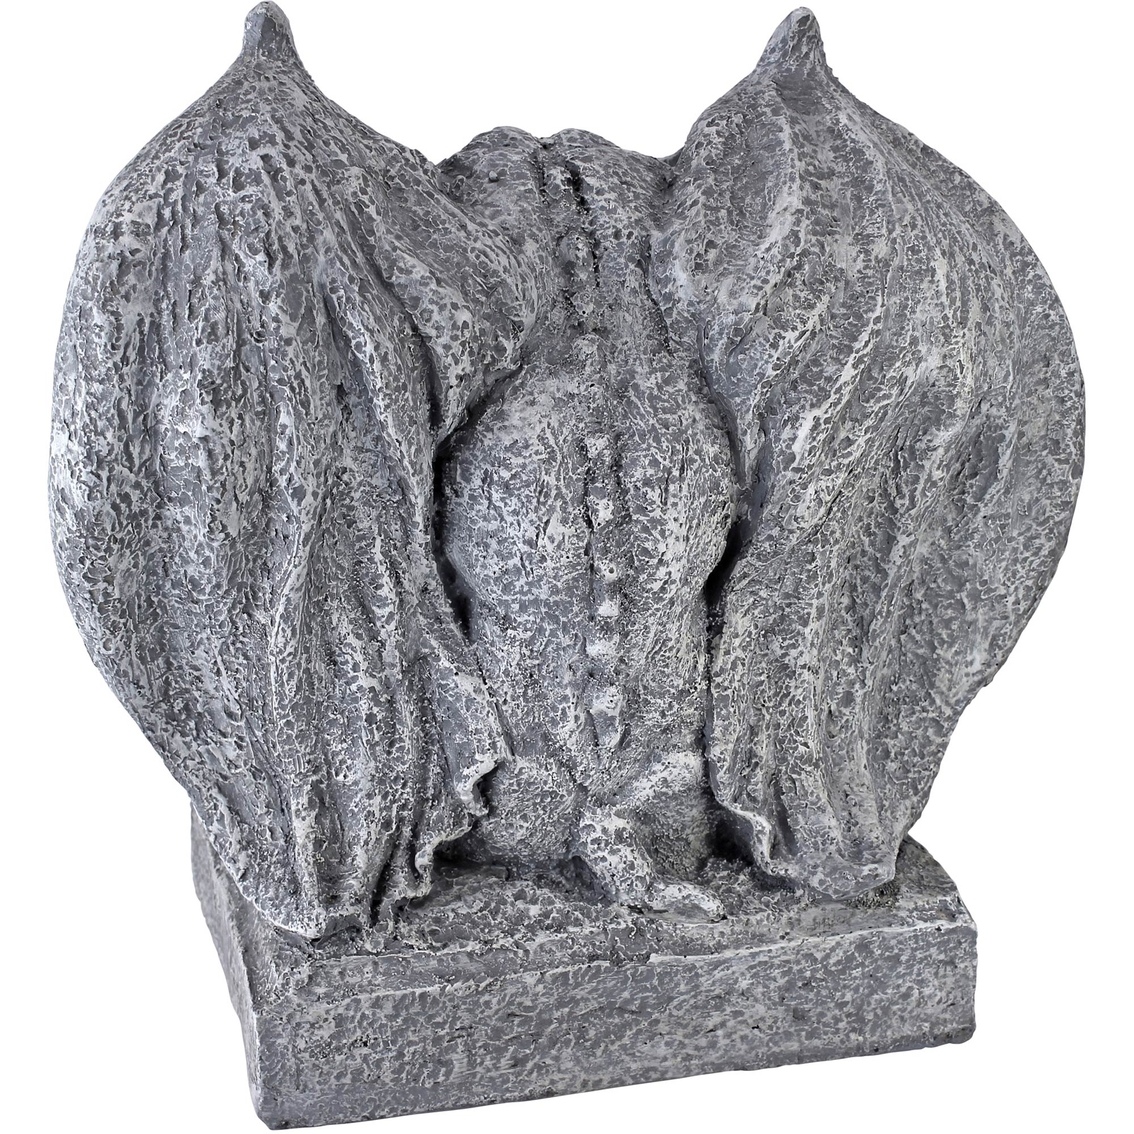 Design Toscano Gomorrah the Gothic Gargoyle Statue - Image 3 of 4